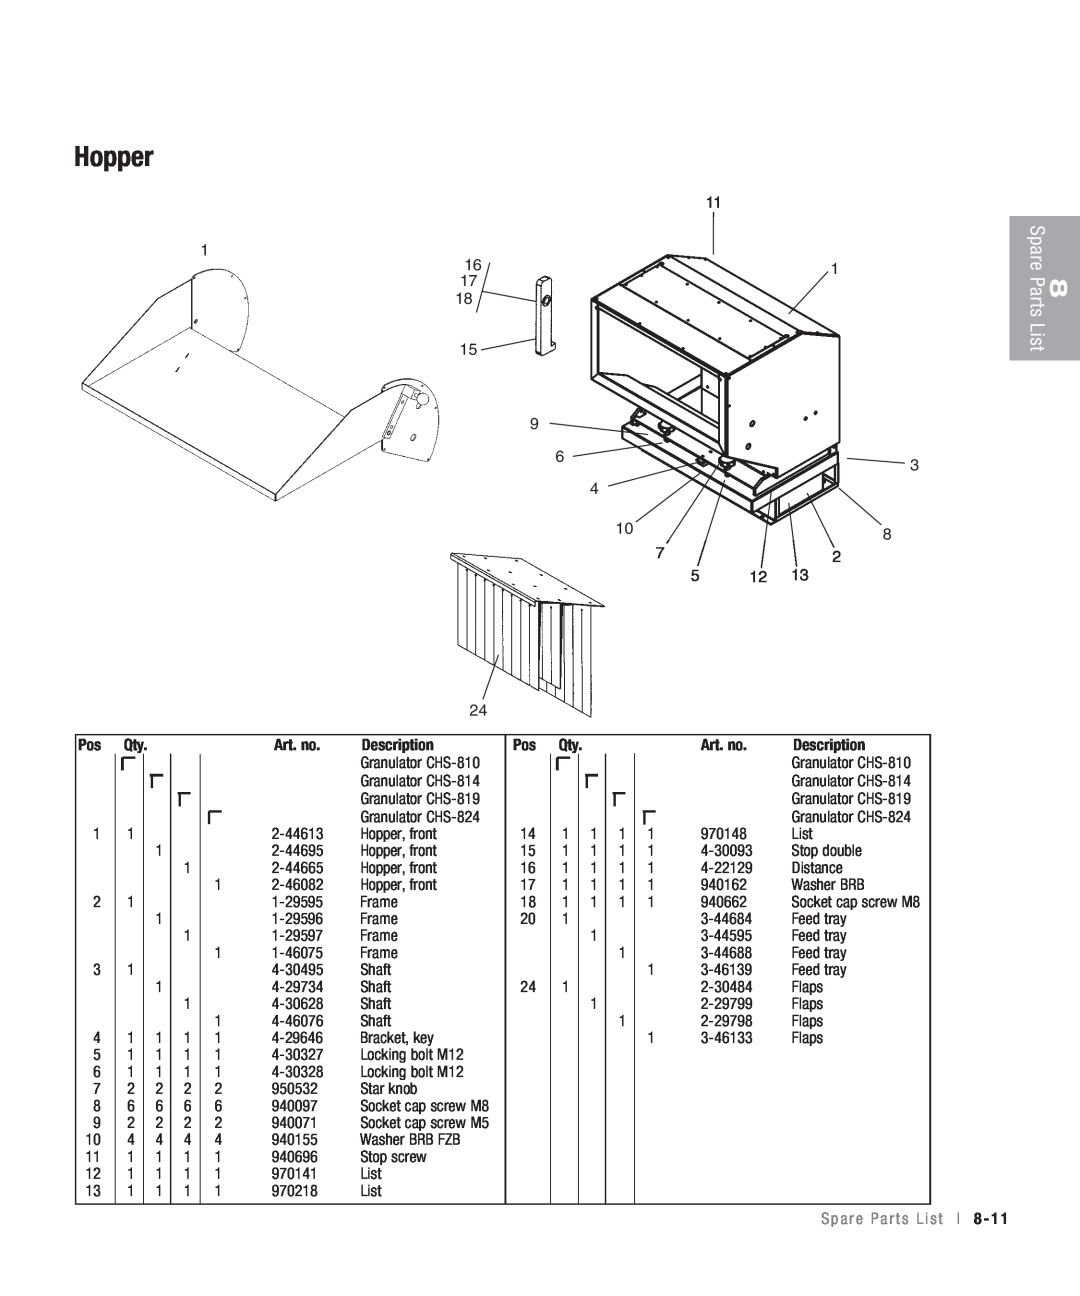 Conair CHS-810 manual Hopper, Art. no, Description, Spare Parts, List, S p a r e P a r t s L i s t l 8 